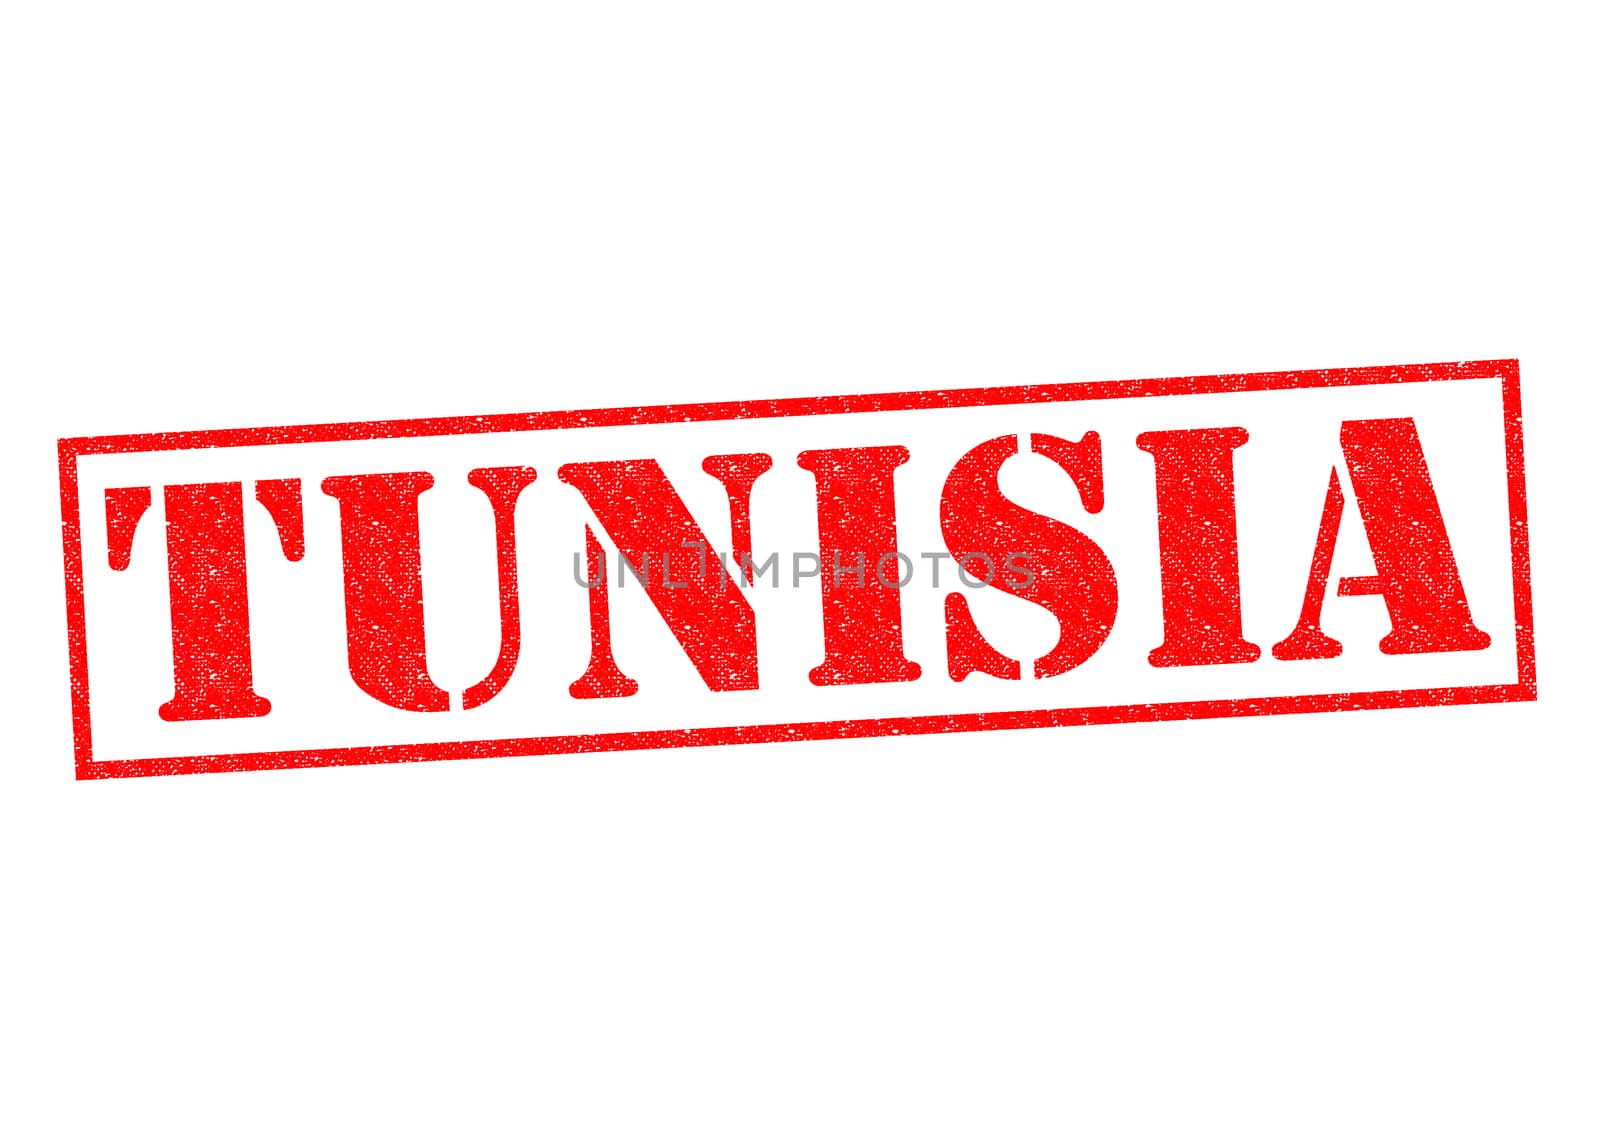 TUNISIA Rubber stamp over a white background.